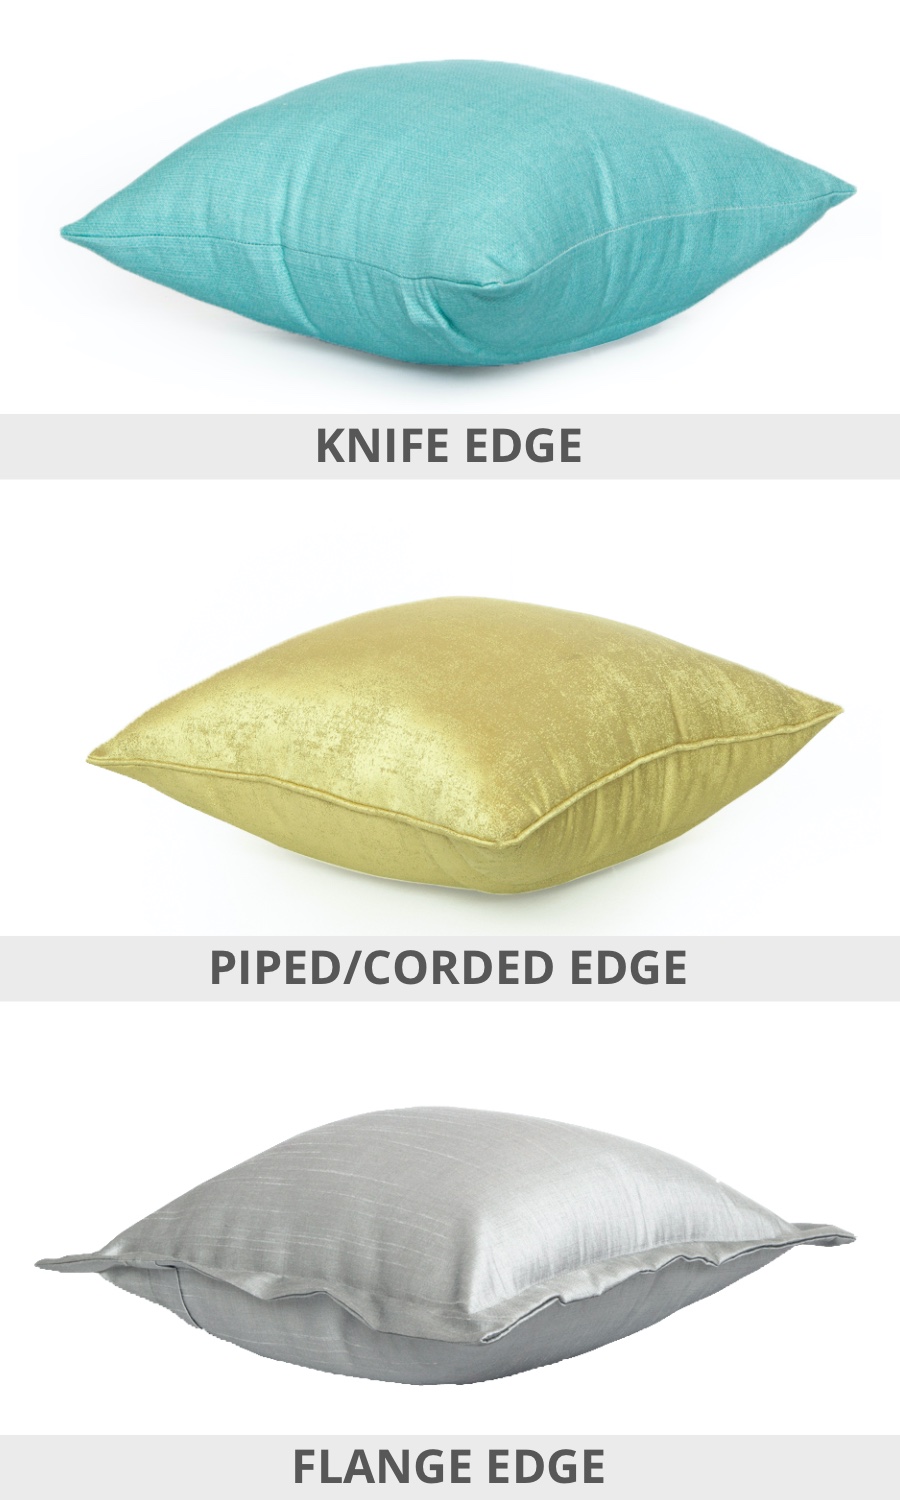 DecorX 18x18 Rustic Linen Fall Pillow Covers - Set of 4 – JoyX